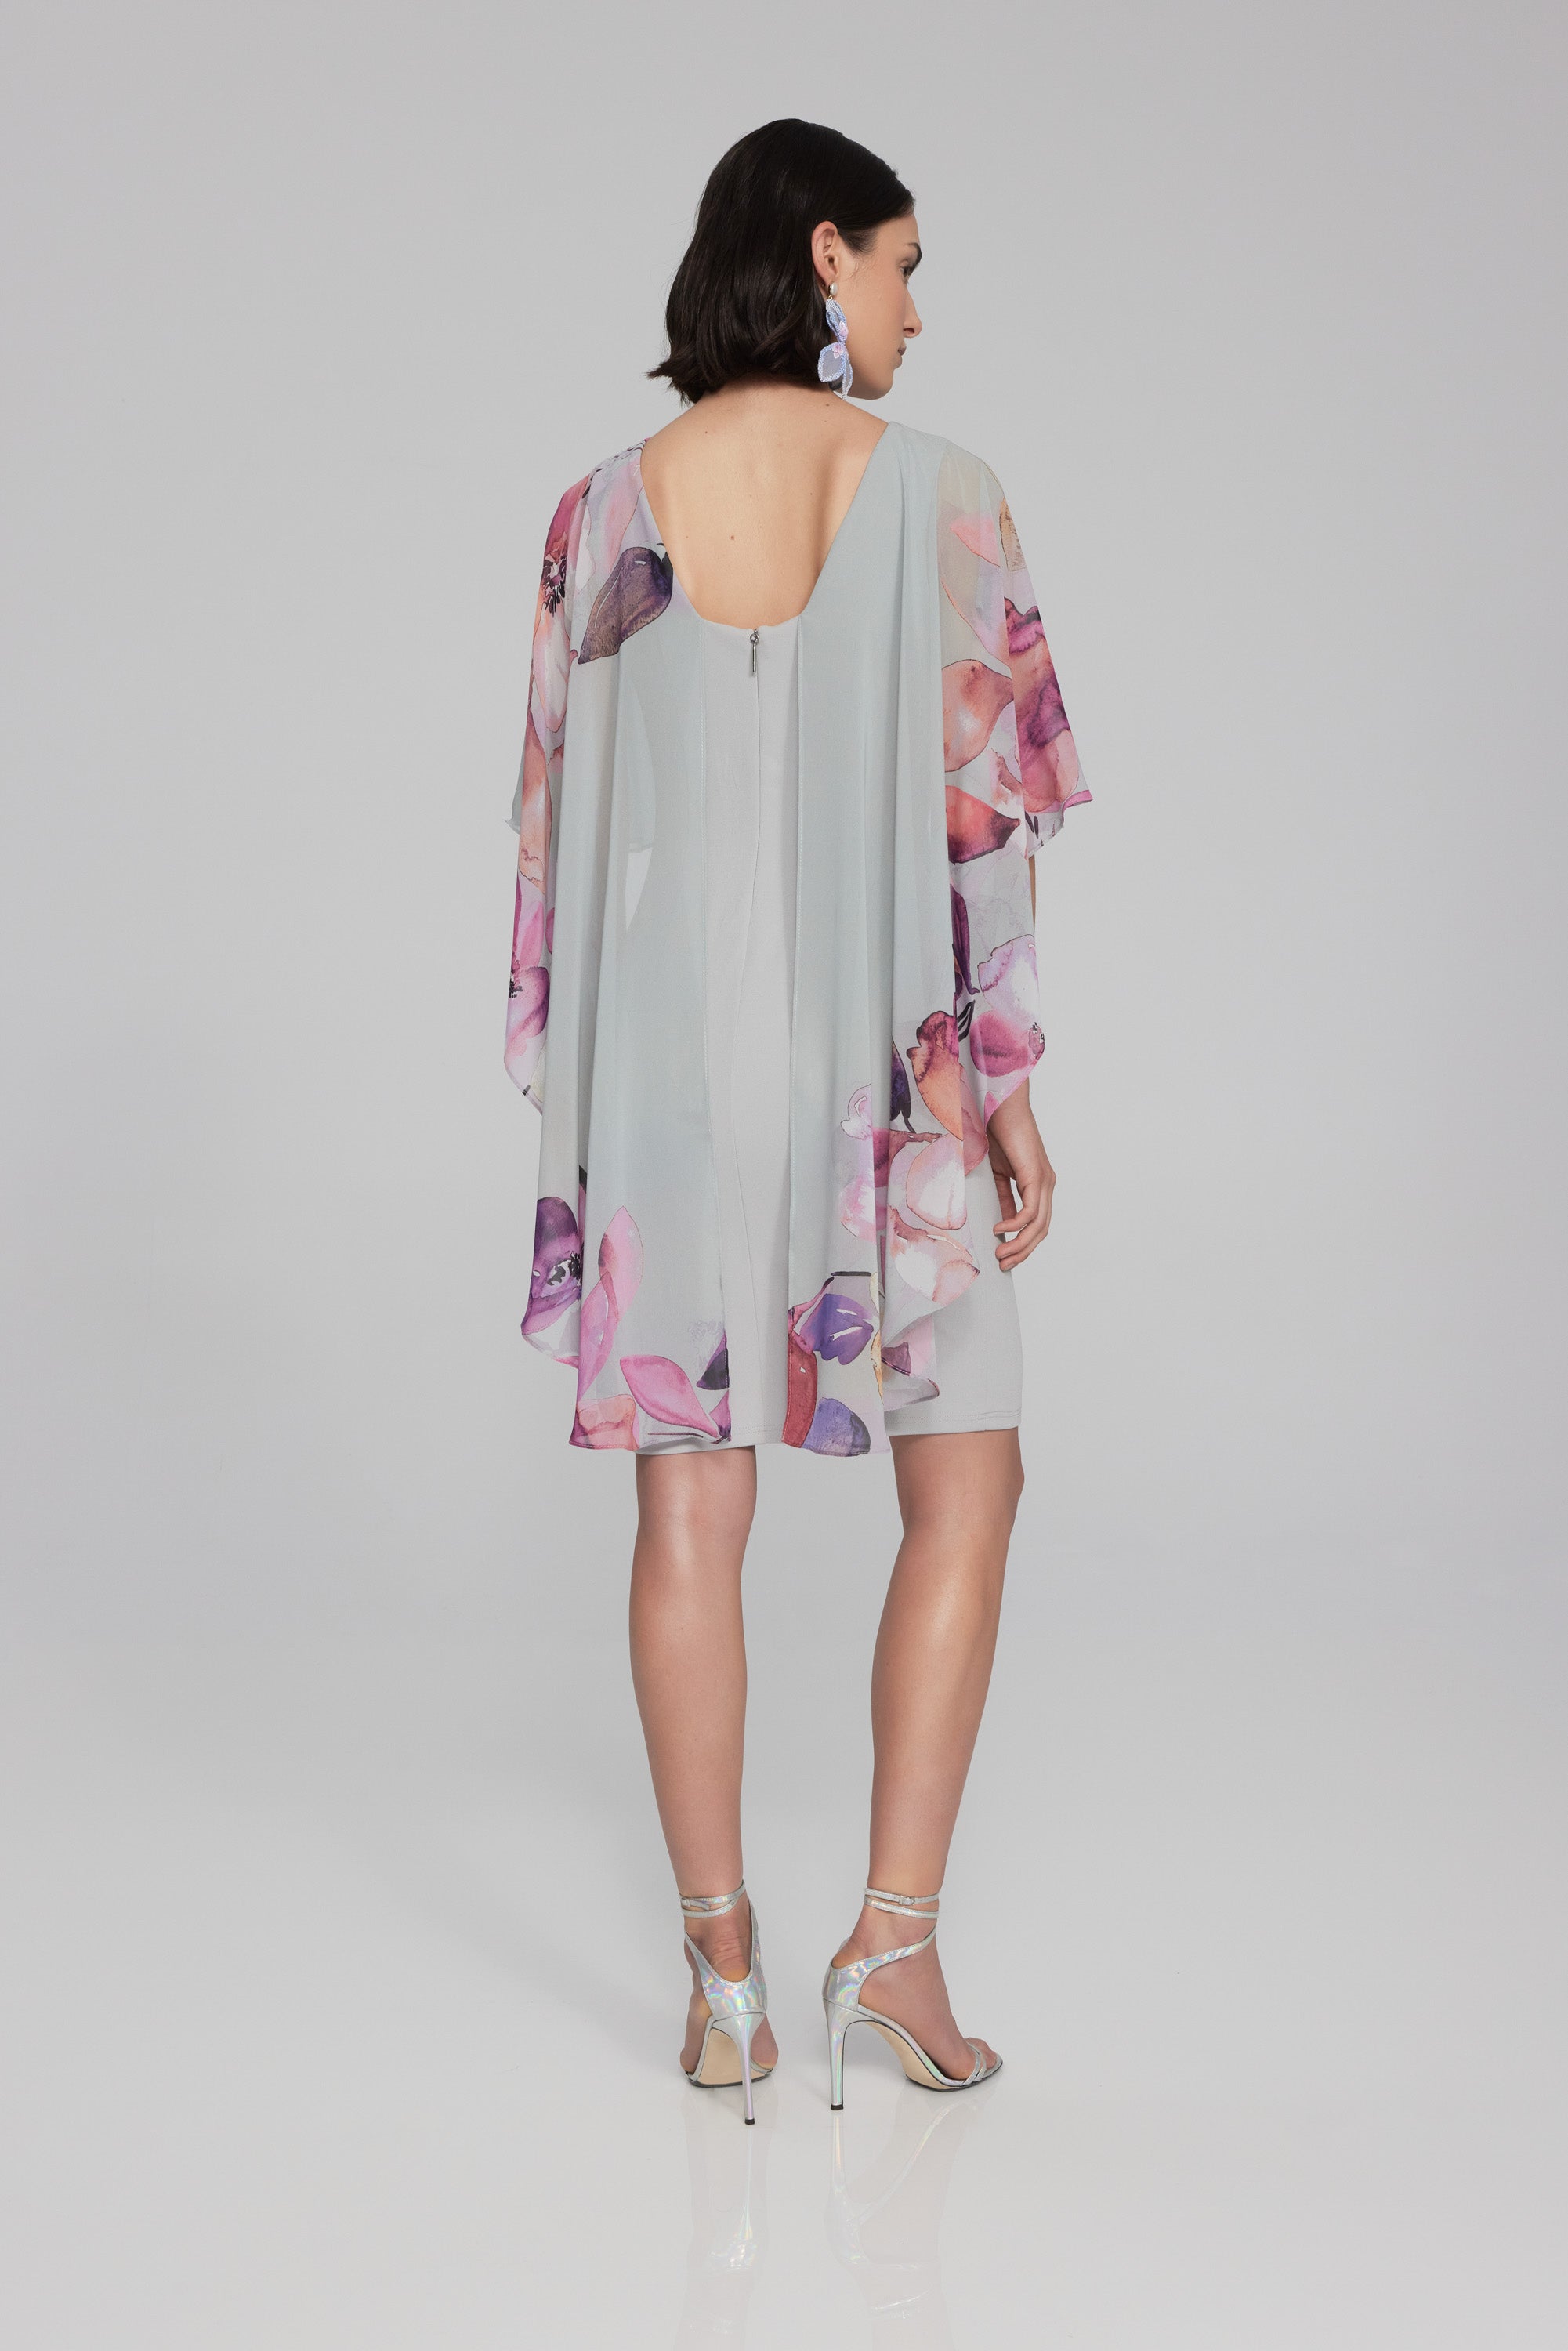 Joseph Ribkoff Grey/Multi Floral Print Chiffon Sheath Dress Style 